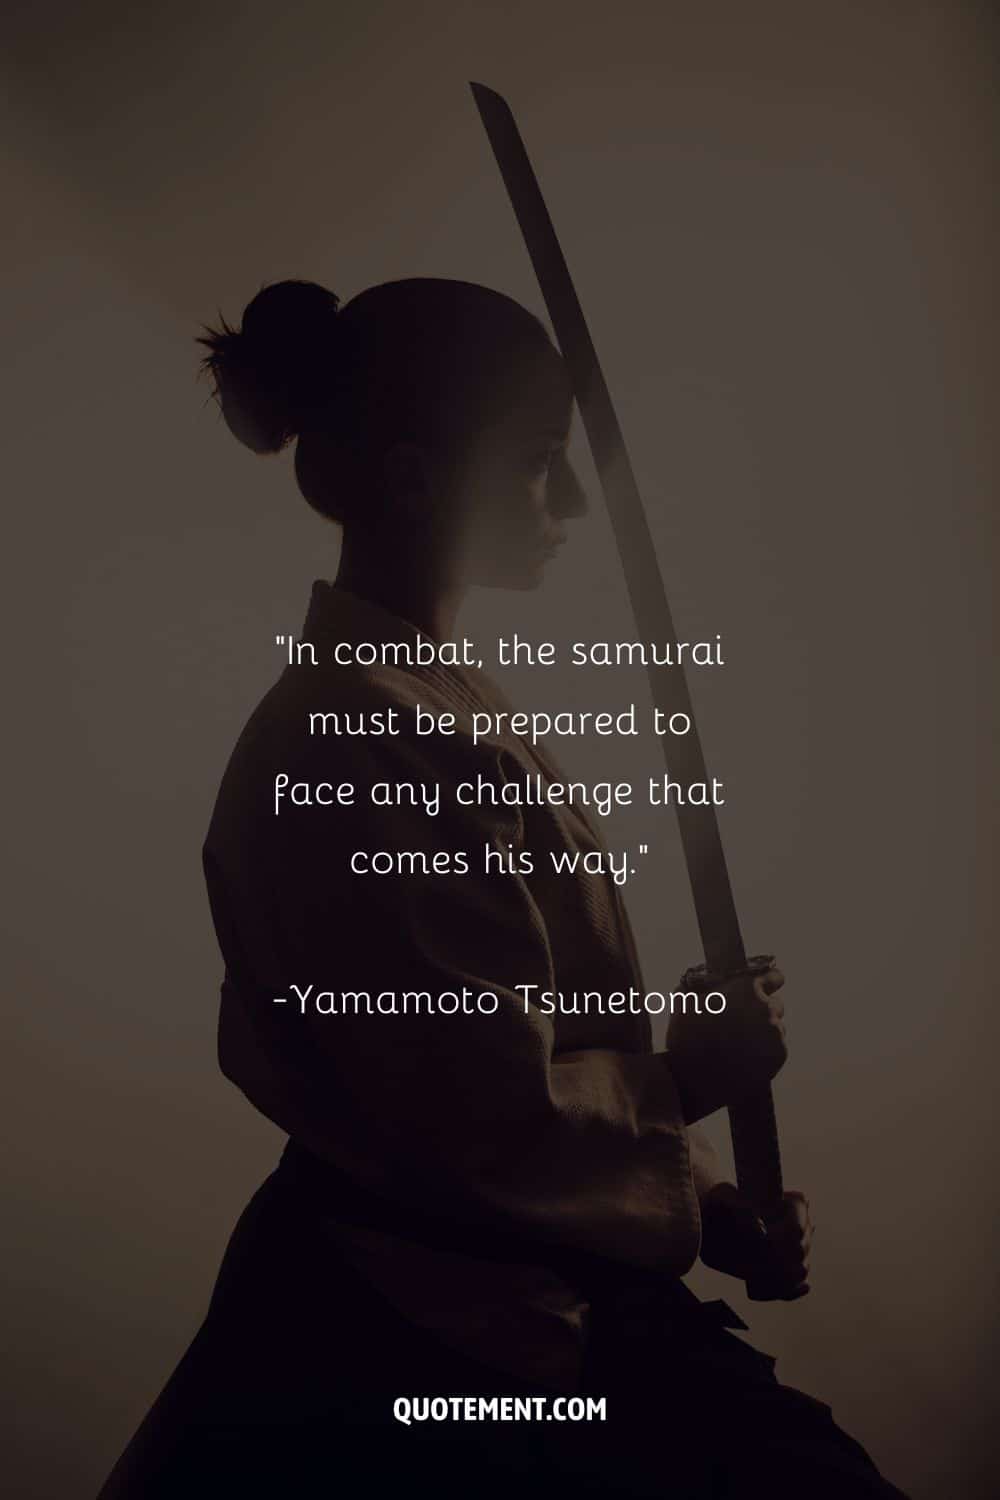 Female samurai and her katana pose representing way of the samurai quote